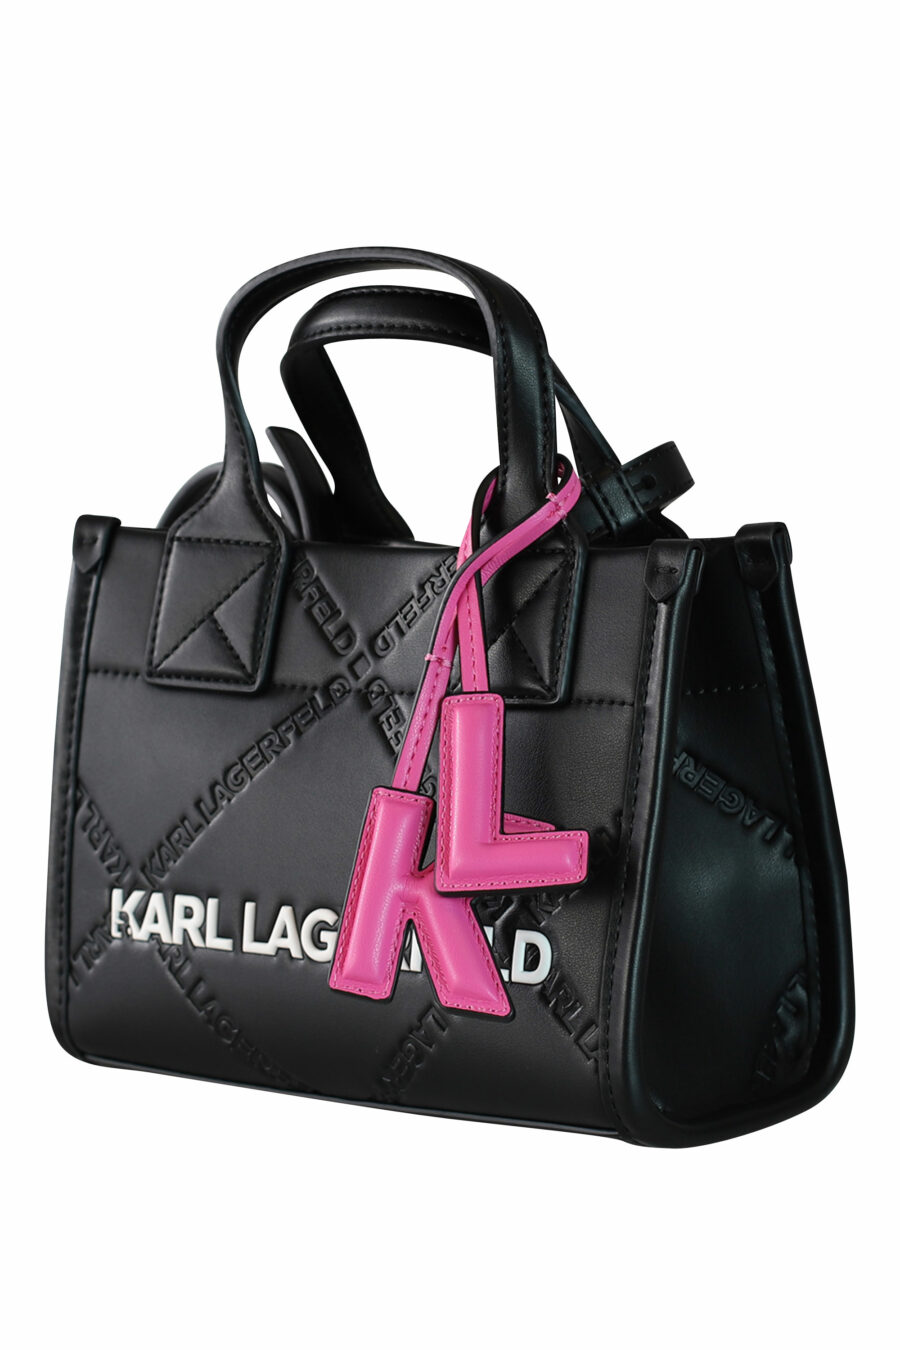 Tote bag mini black /k/skuare/ with embossed logo - 8720744102557 2